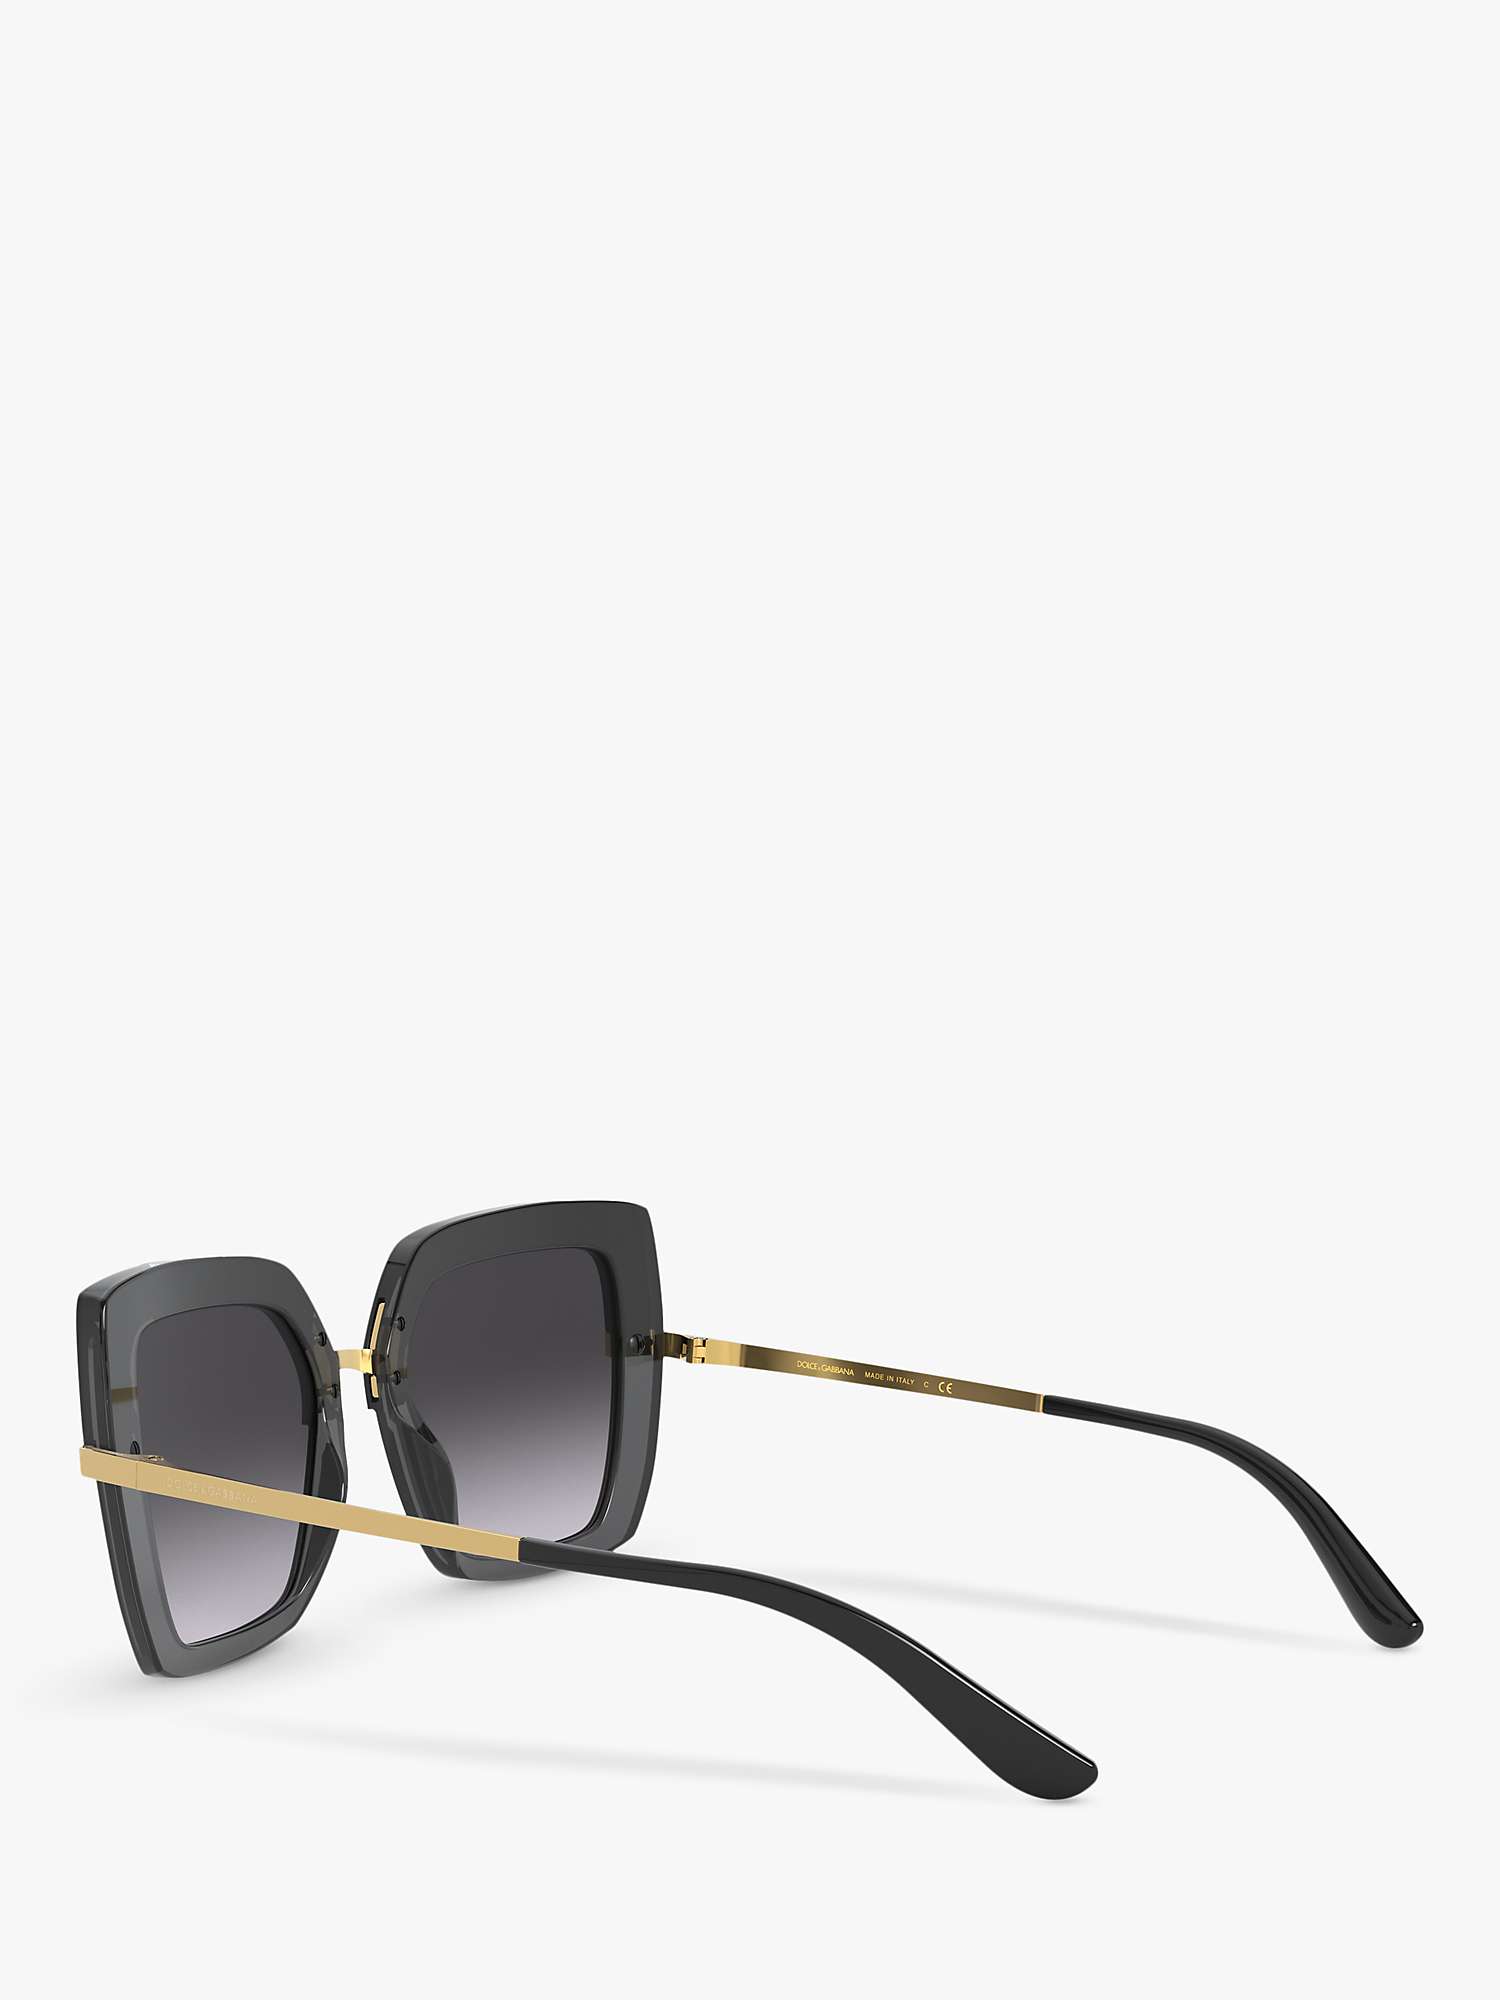 Buy Dolce & Gabbana DG4373 Women's Square Sunglasses Online at johnlewis.com